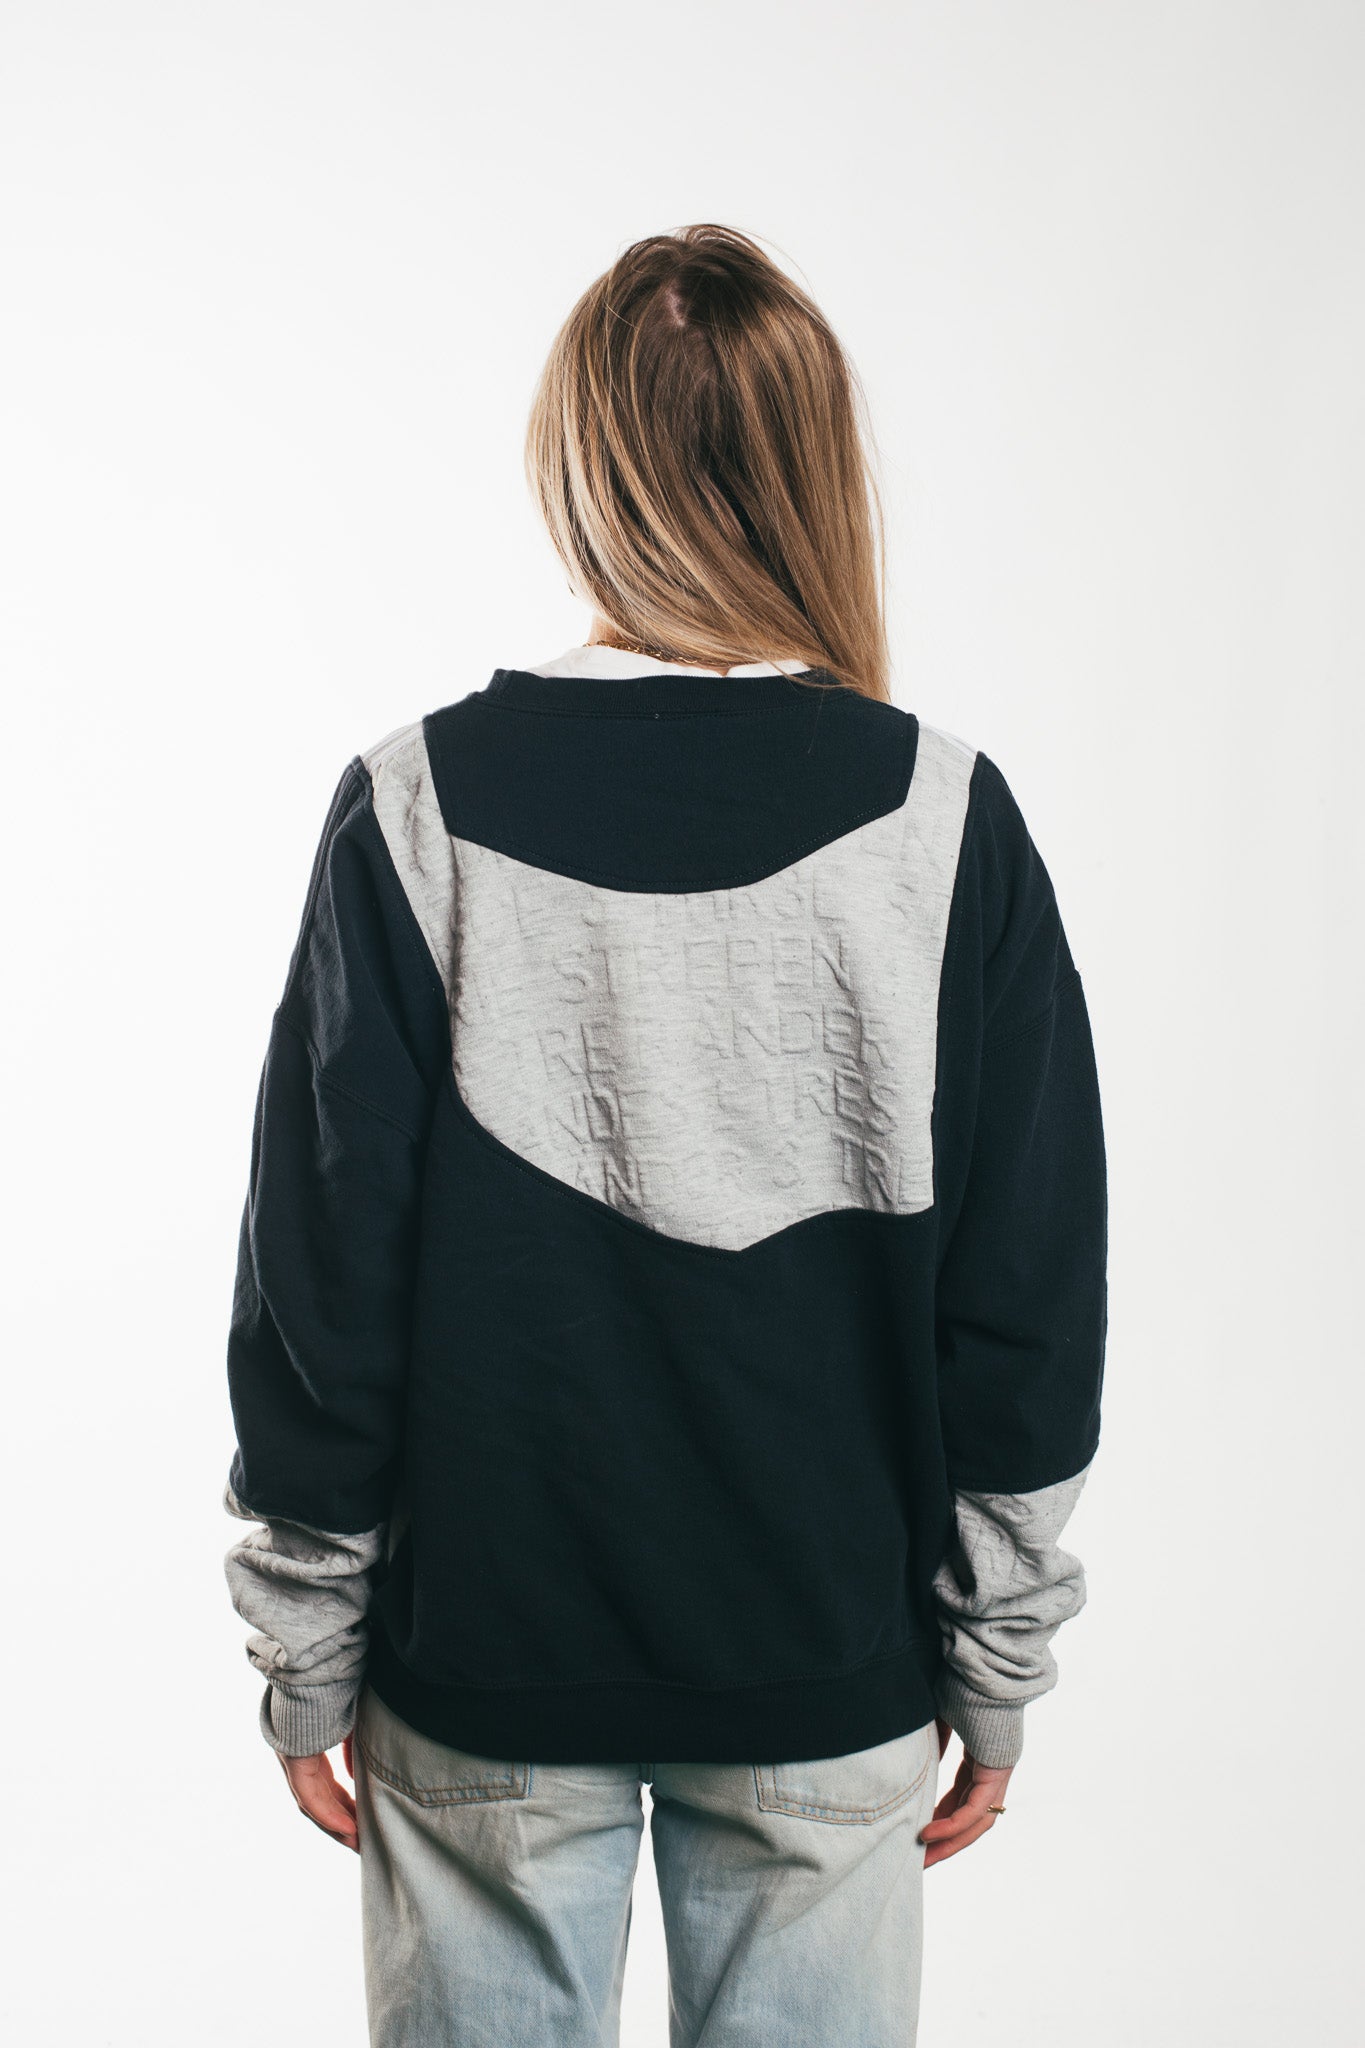 Adidas  - Sweatshirt (L)